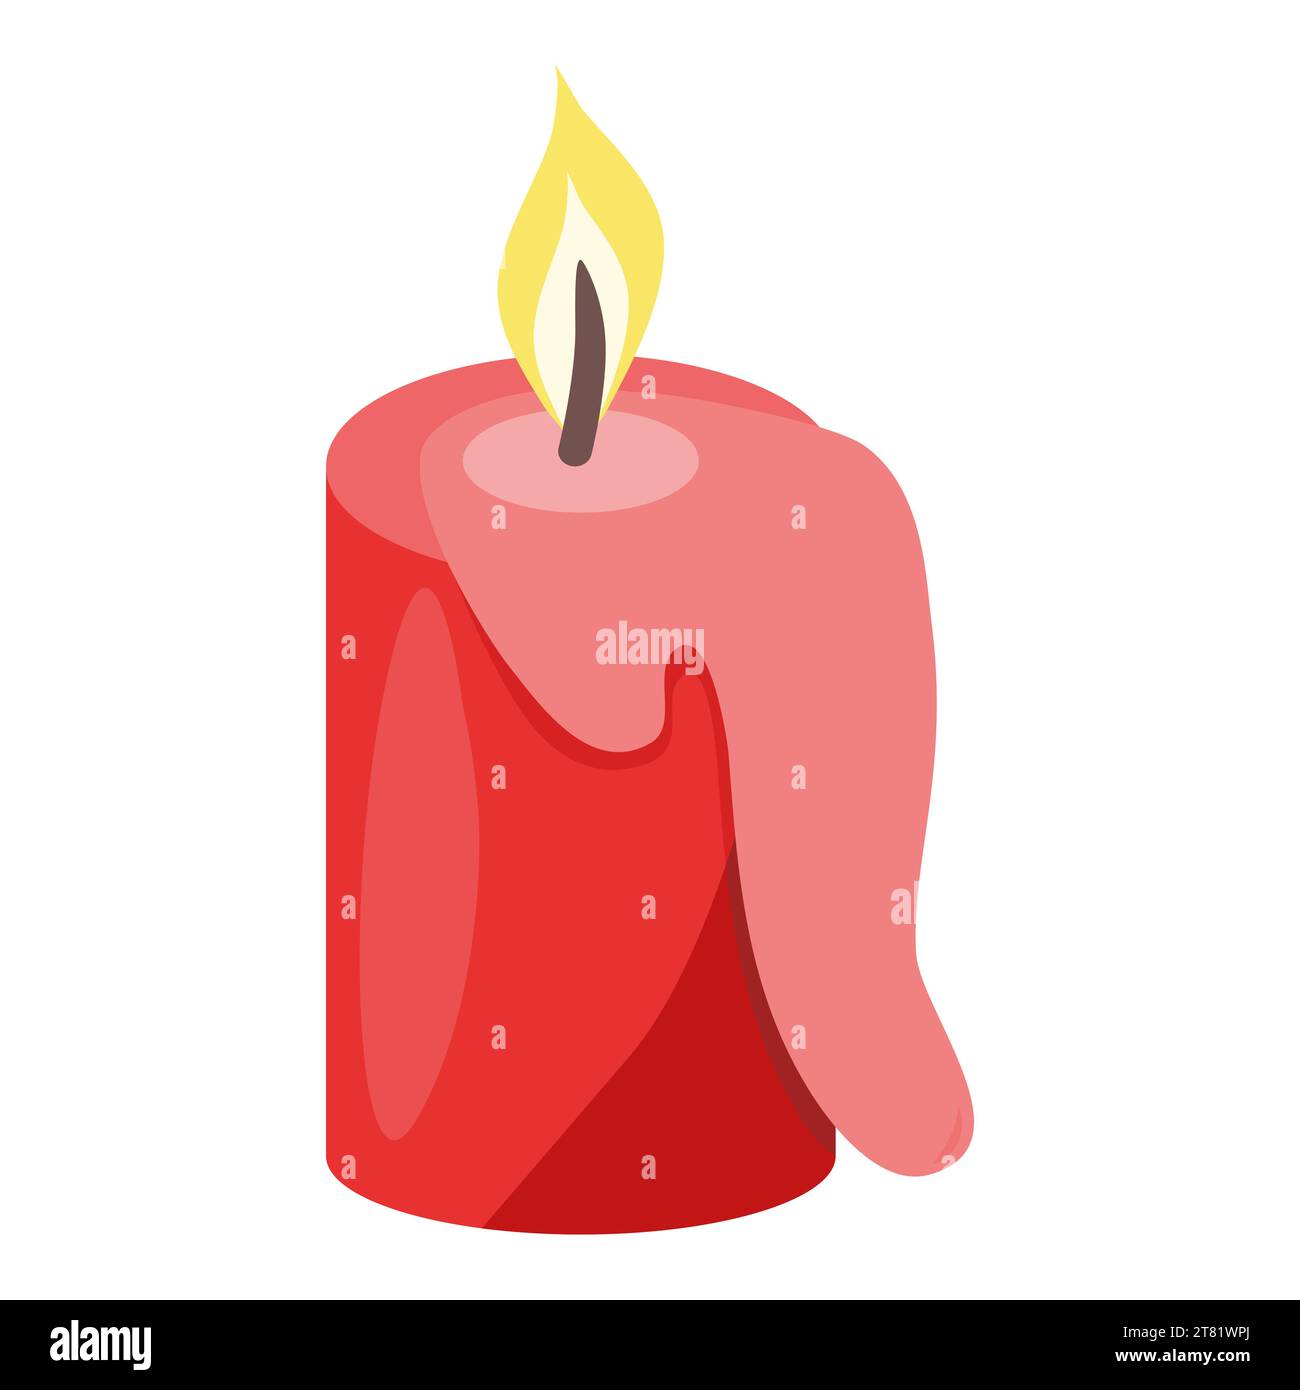 Rote brennende Kerze mit schmelzendem Wachs, flache Vektorillustration Stock Vektor